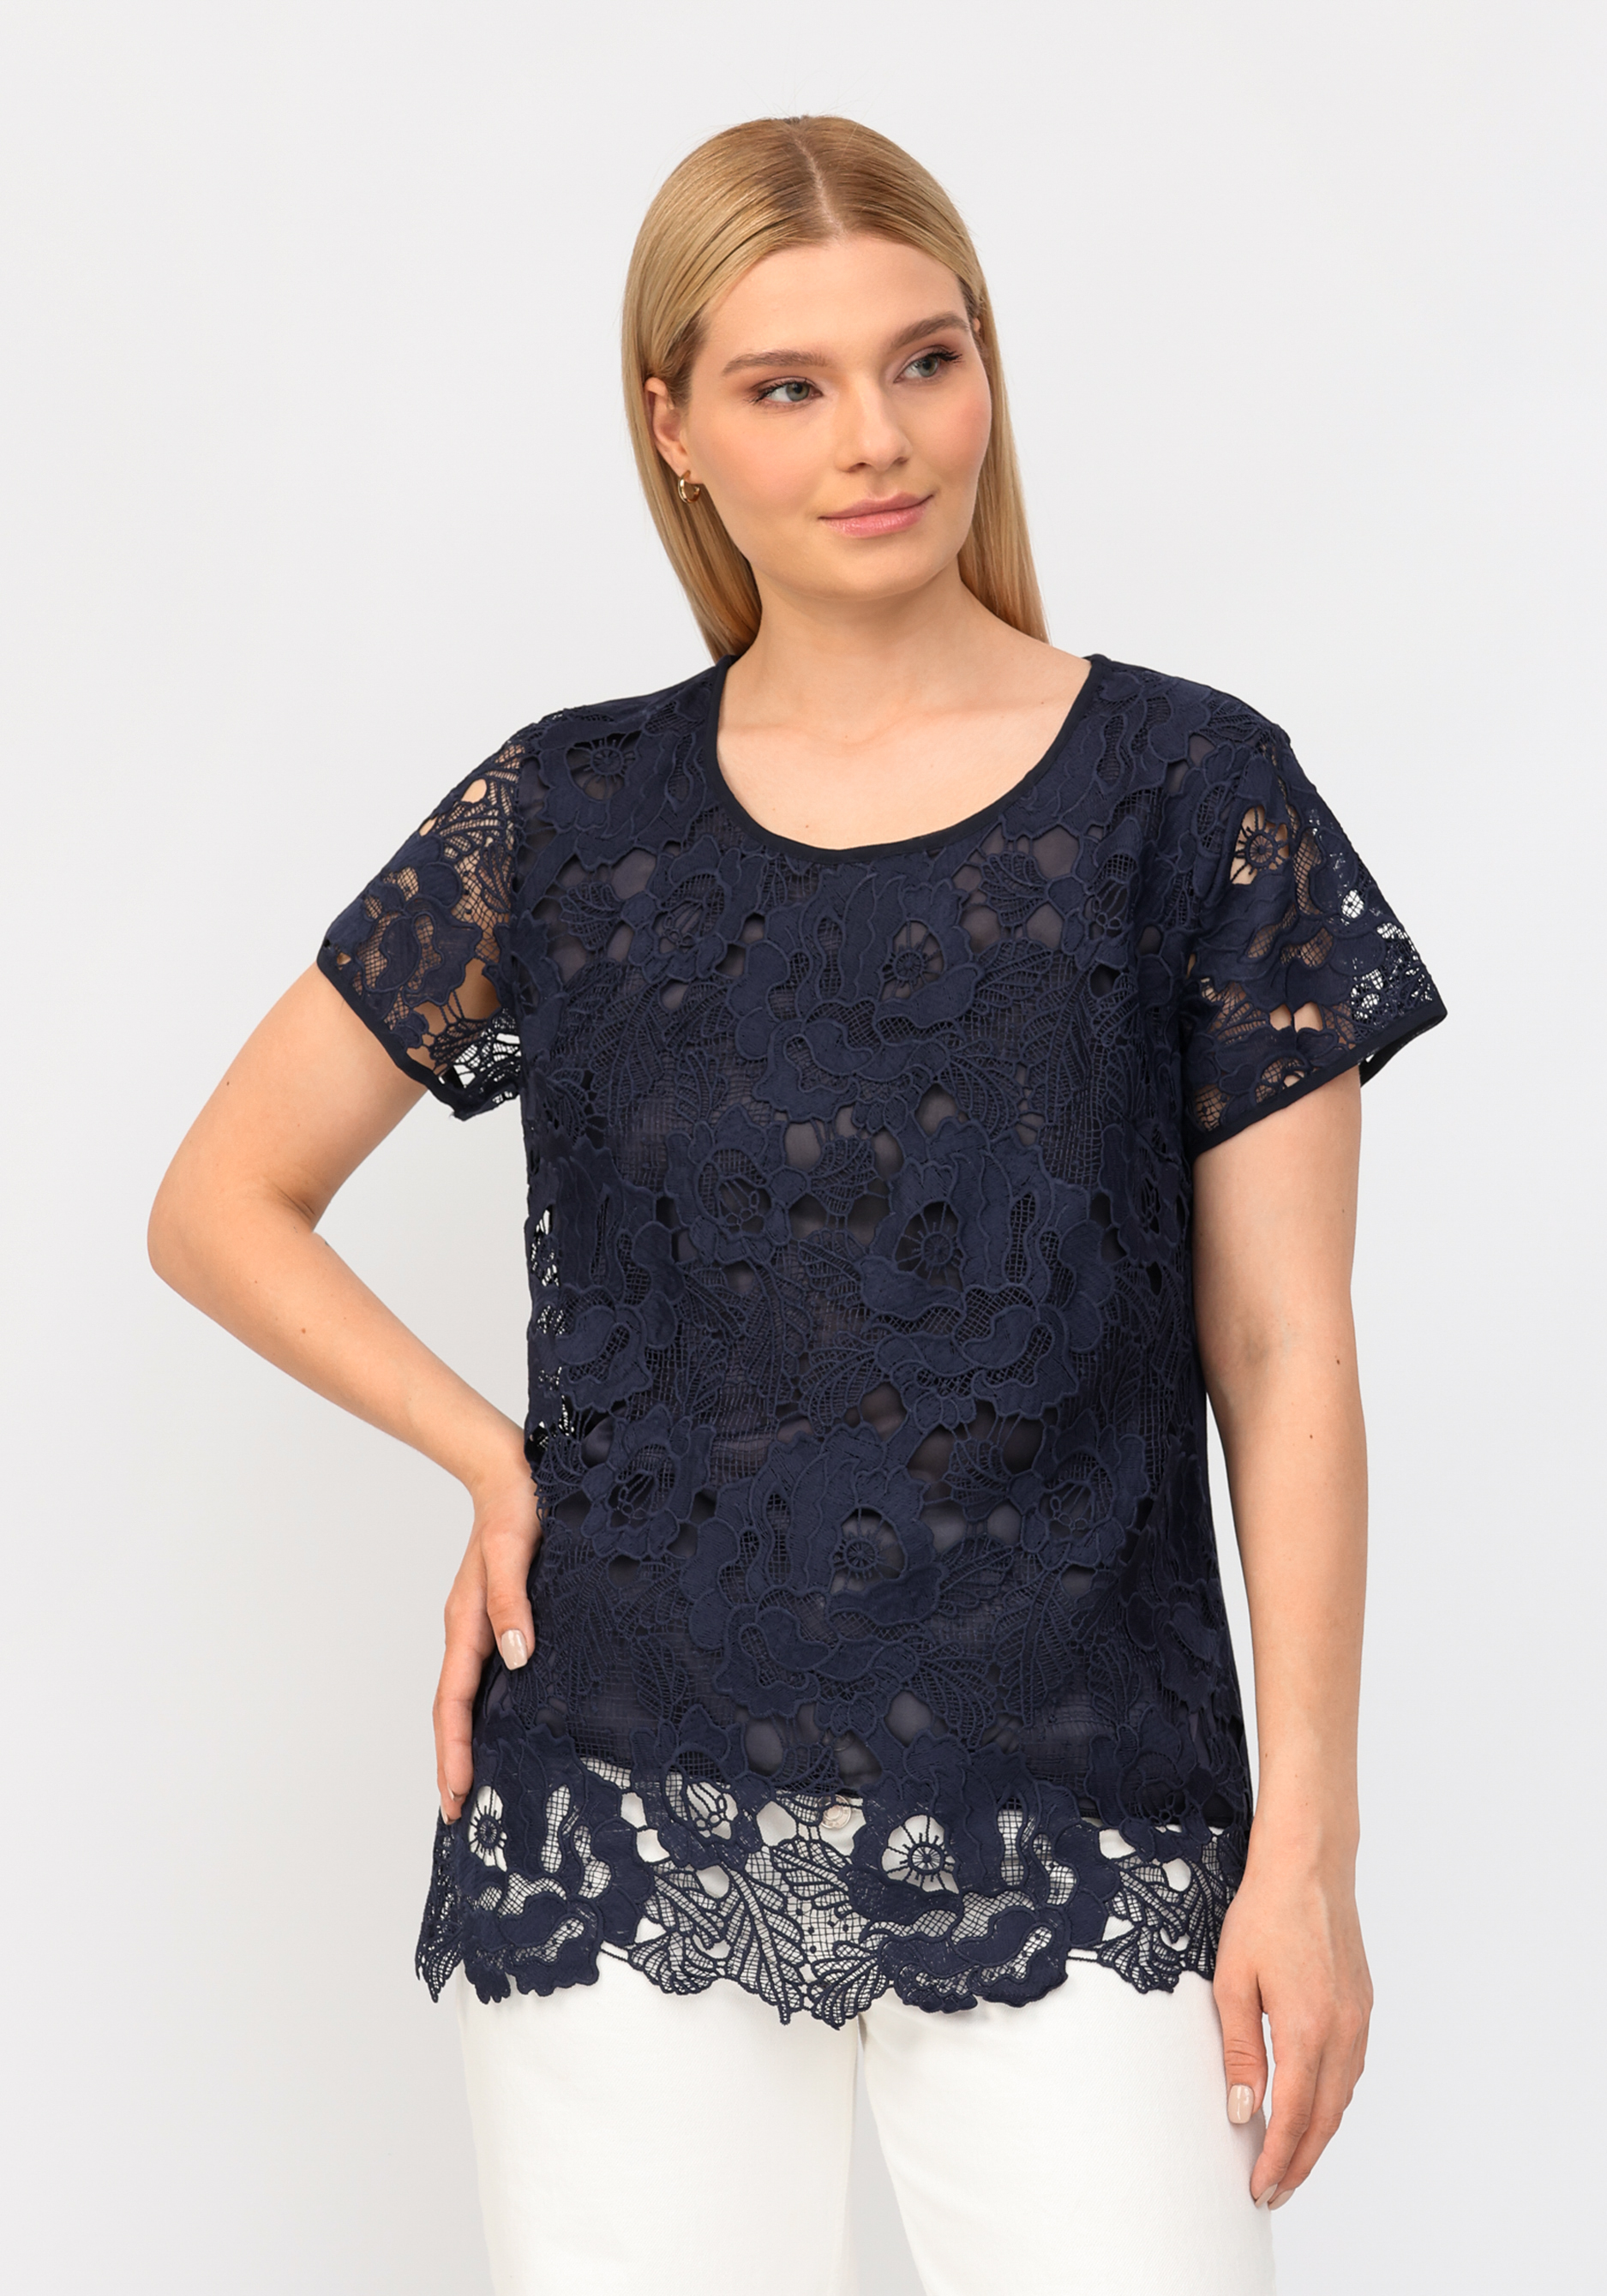 Блуза ажурная с коротким рукавом "Лиана" No name, размер 56, цвет синий